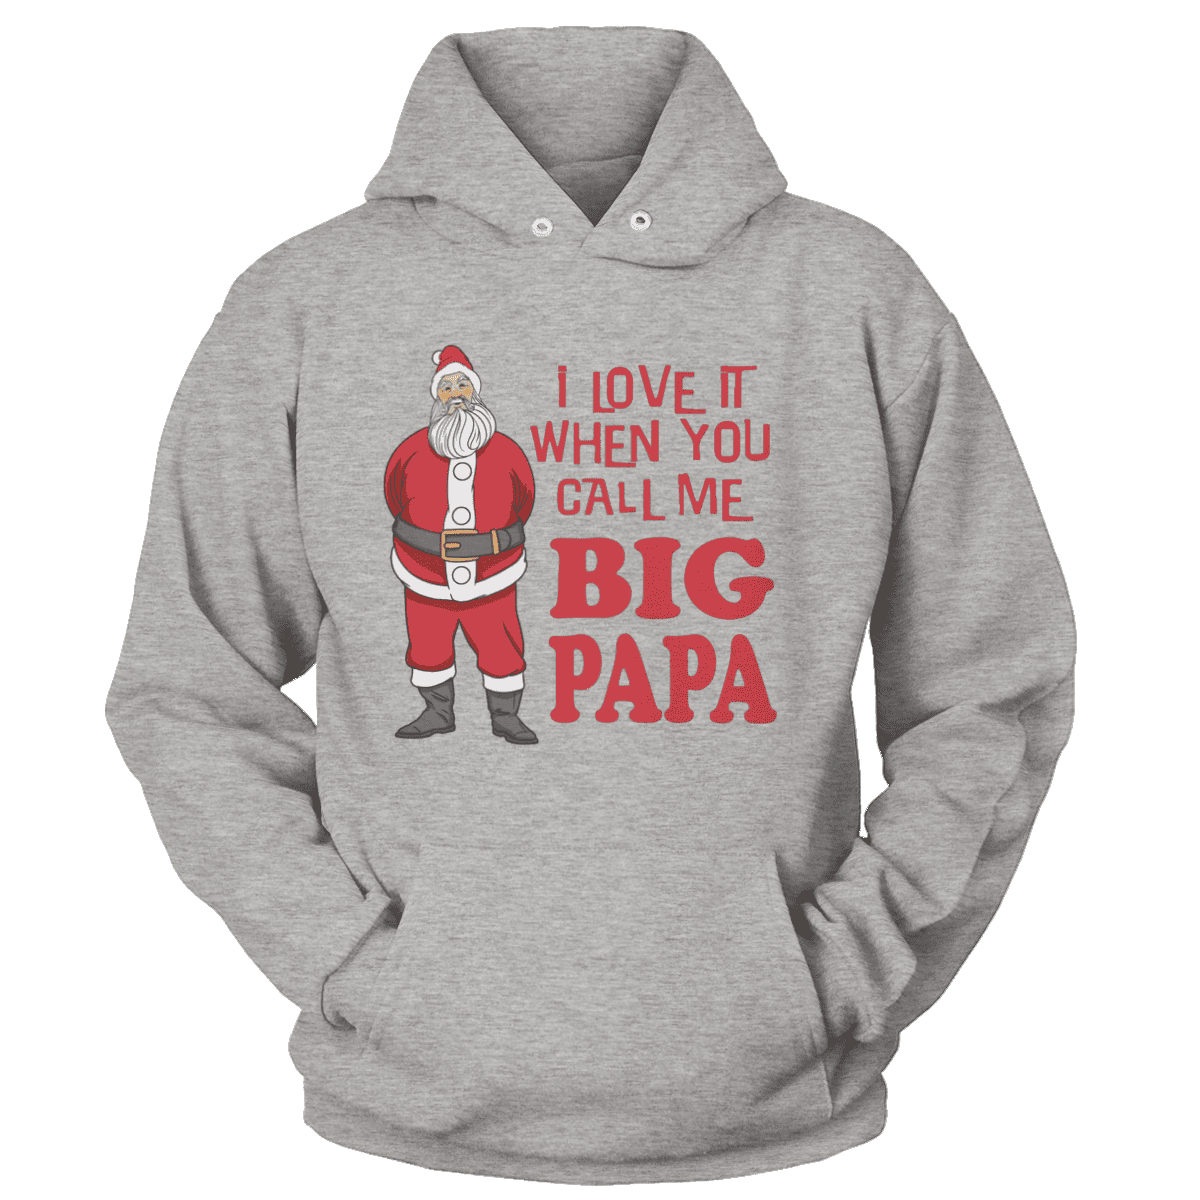 Call Me Big Papa